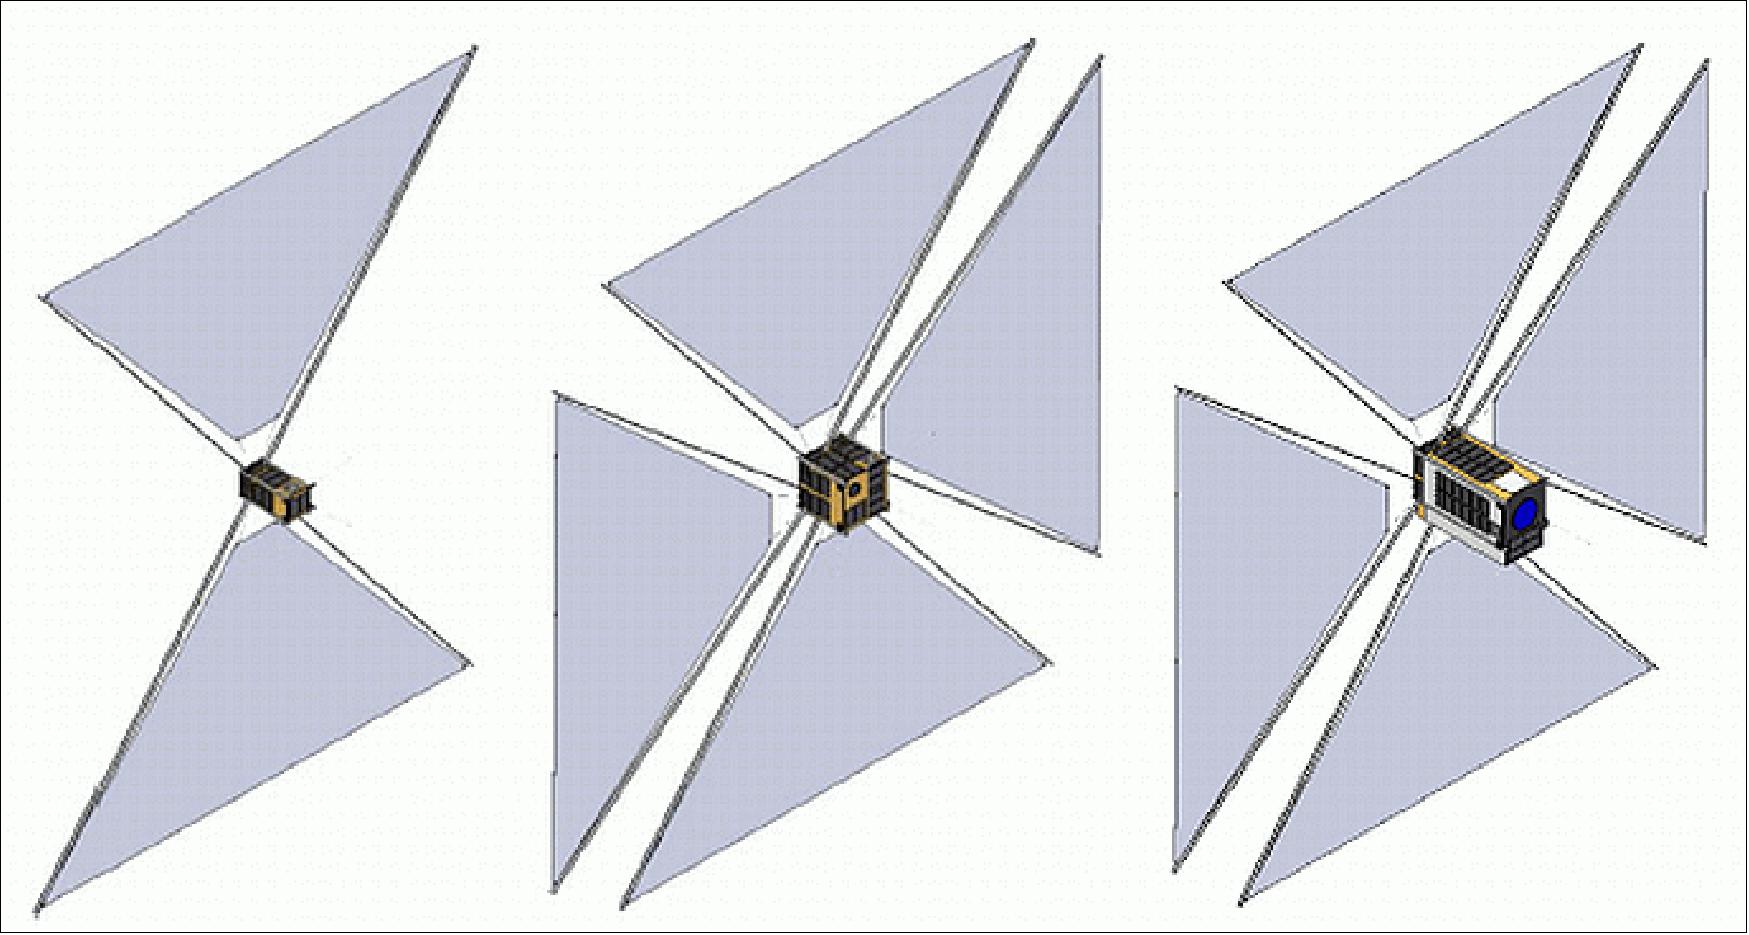 Figure 25: Concept models for drag sail module Integration with various satellite platforms(image credit: UTIAS/SFL)